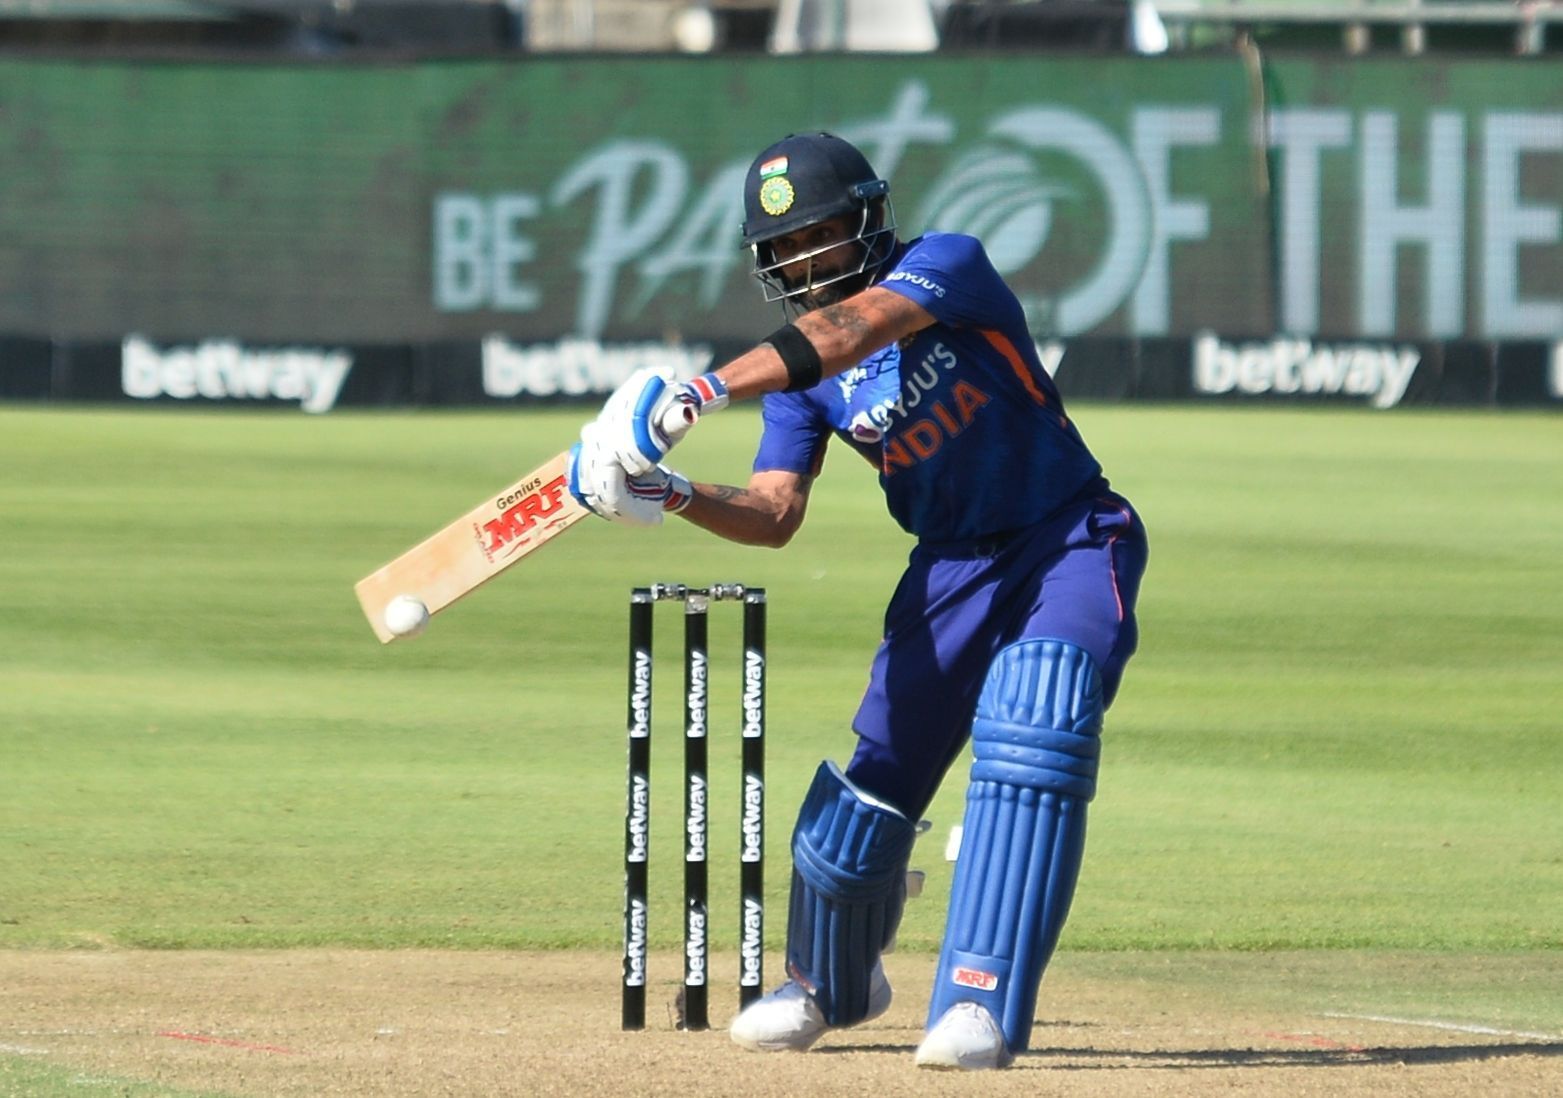 Kohli batting during the 3rd ODI. Pic: Getty Images